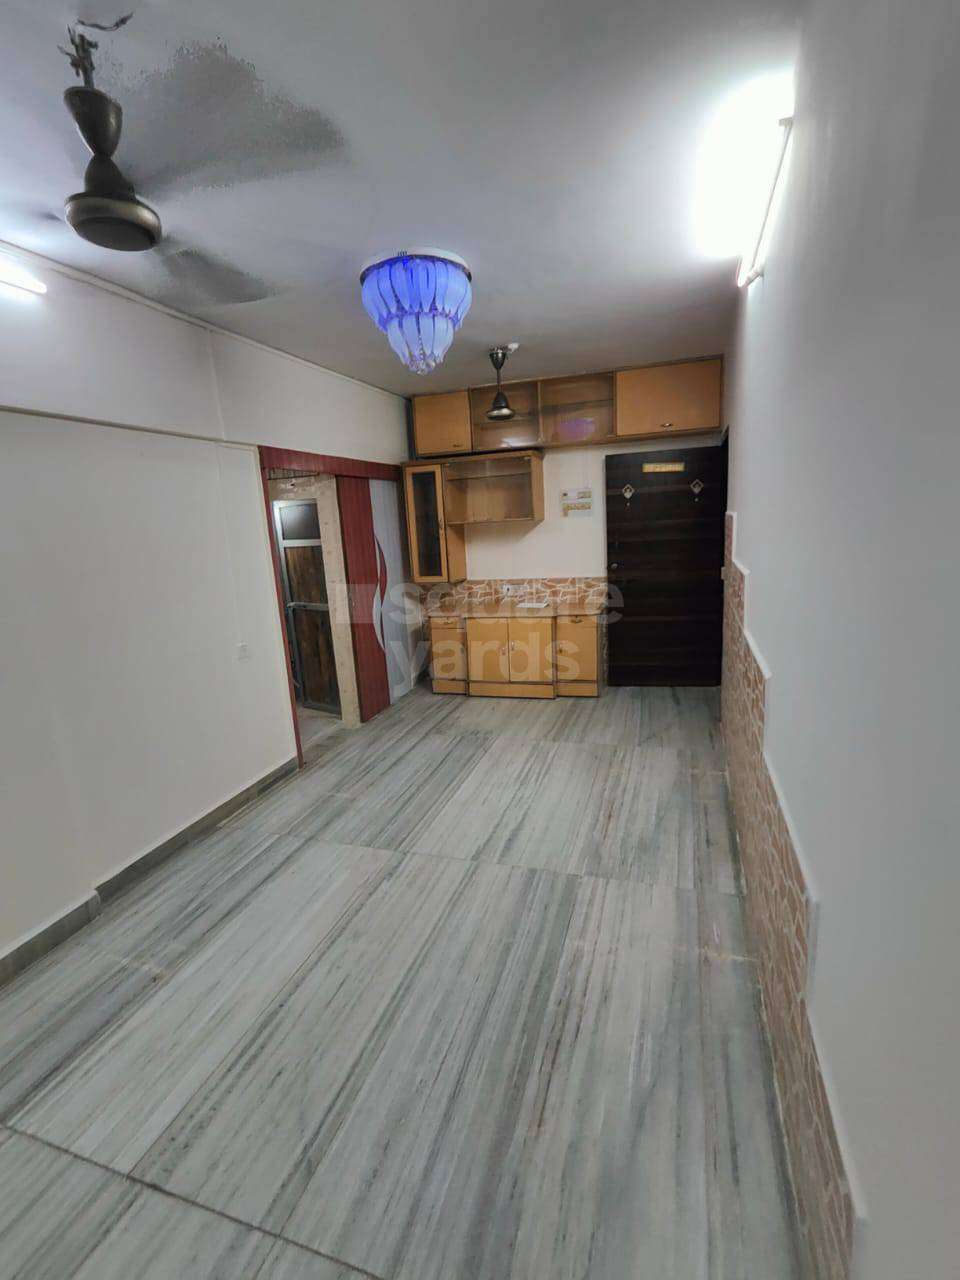 Rental 1 Bedroom 450 Sq.Ft. Apartment In Ghatkopar West Mumbai - 5108692